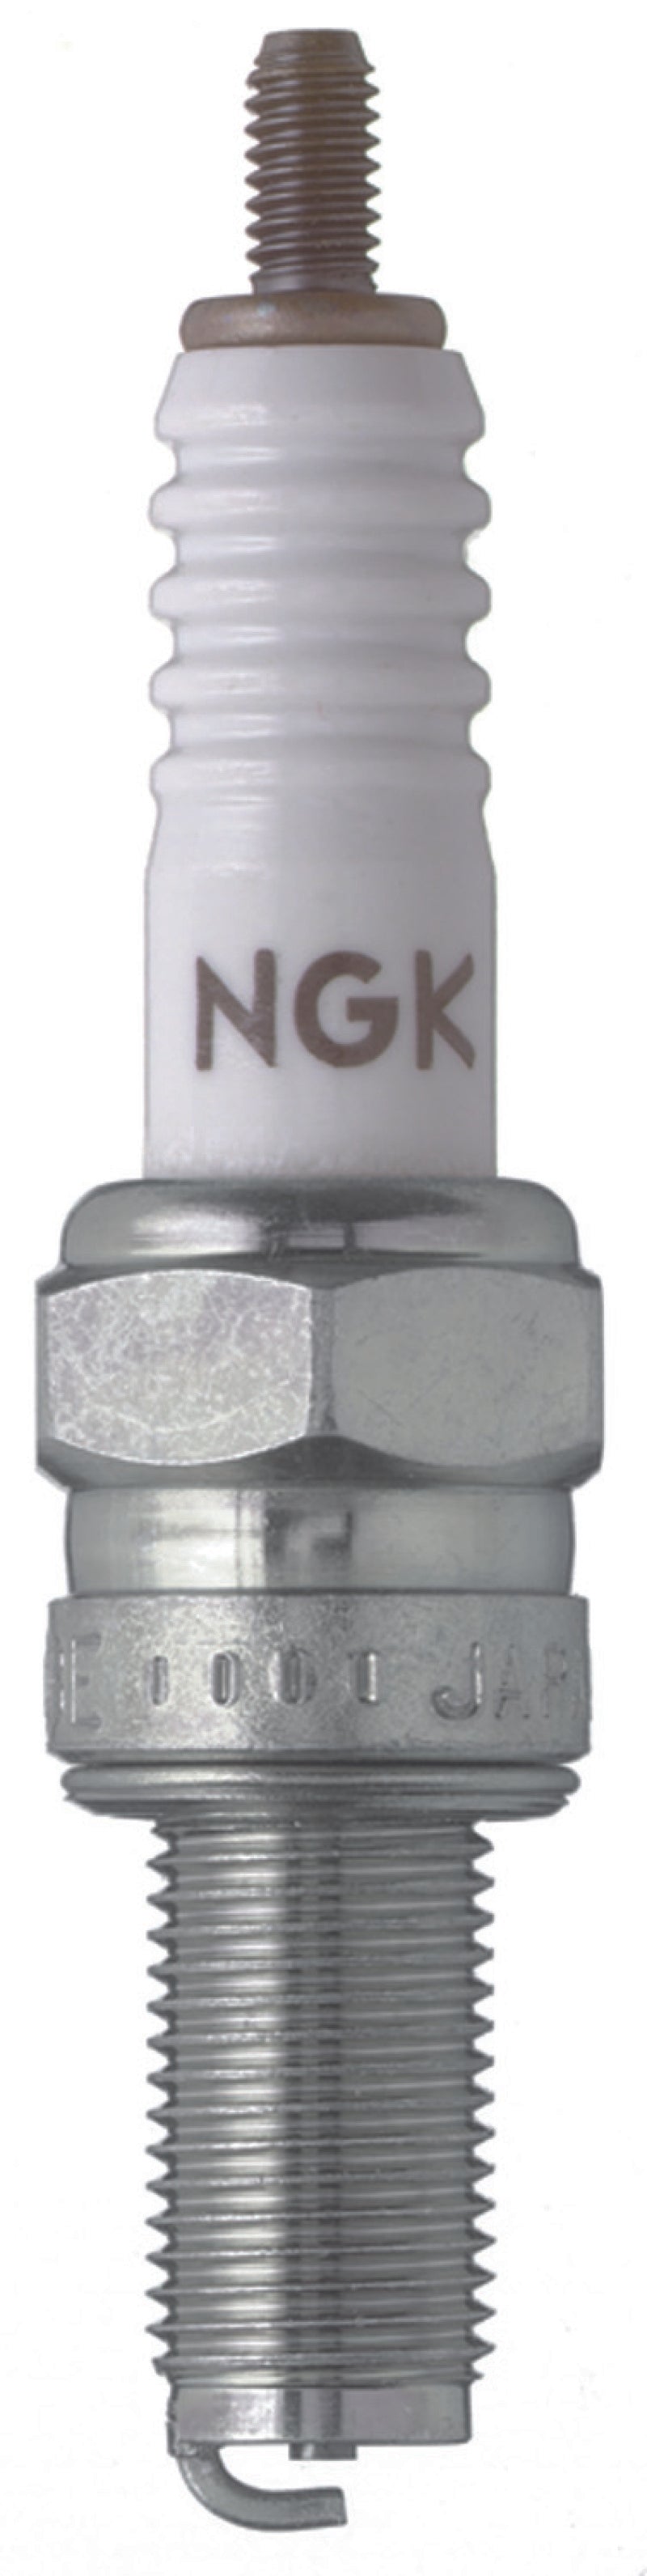 NGK Standard Spark Plug Box of 4 (C8E) -  Shop now at Performance Car Parts